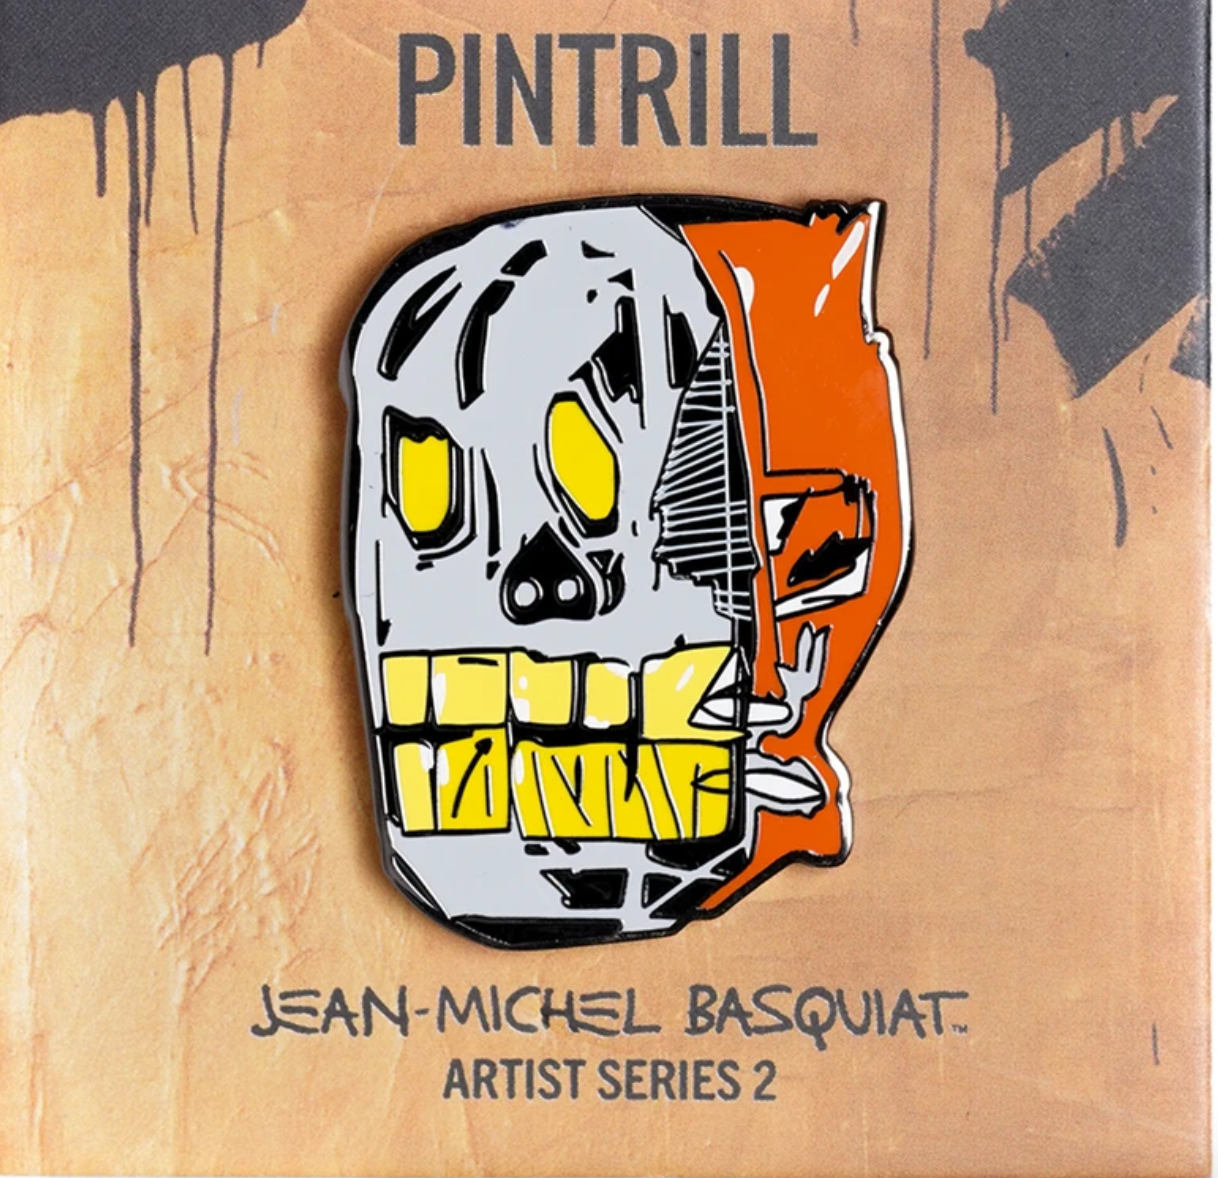 Jean-Michel Basquiat Robot Pin